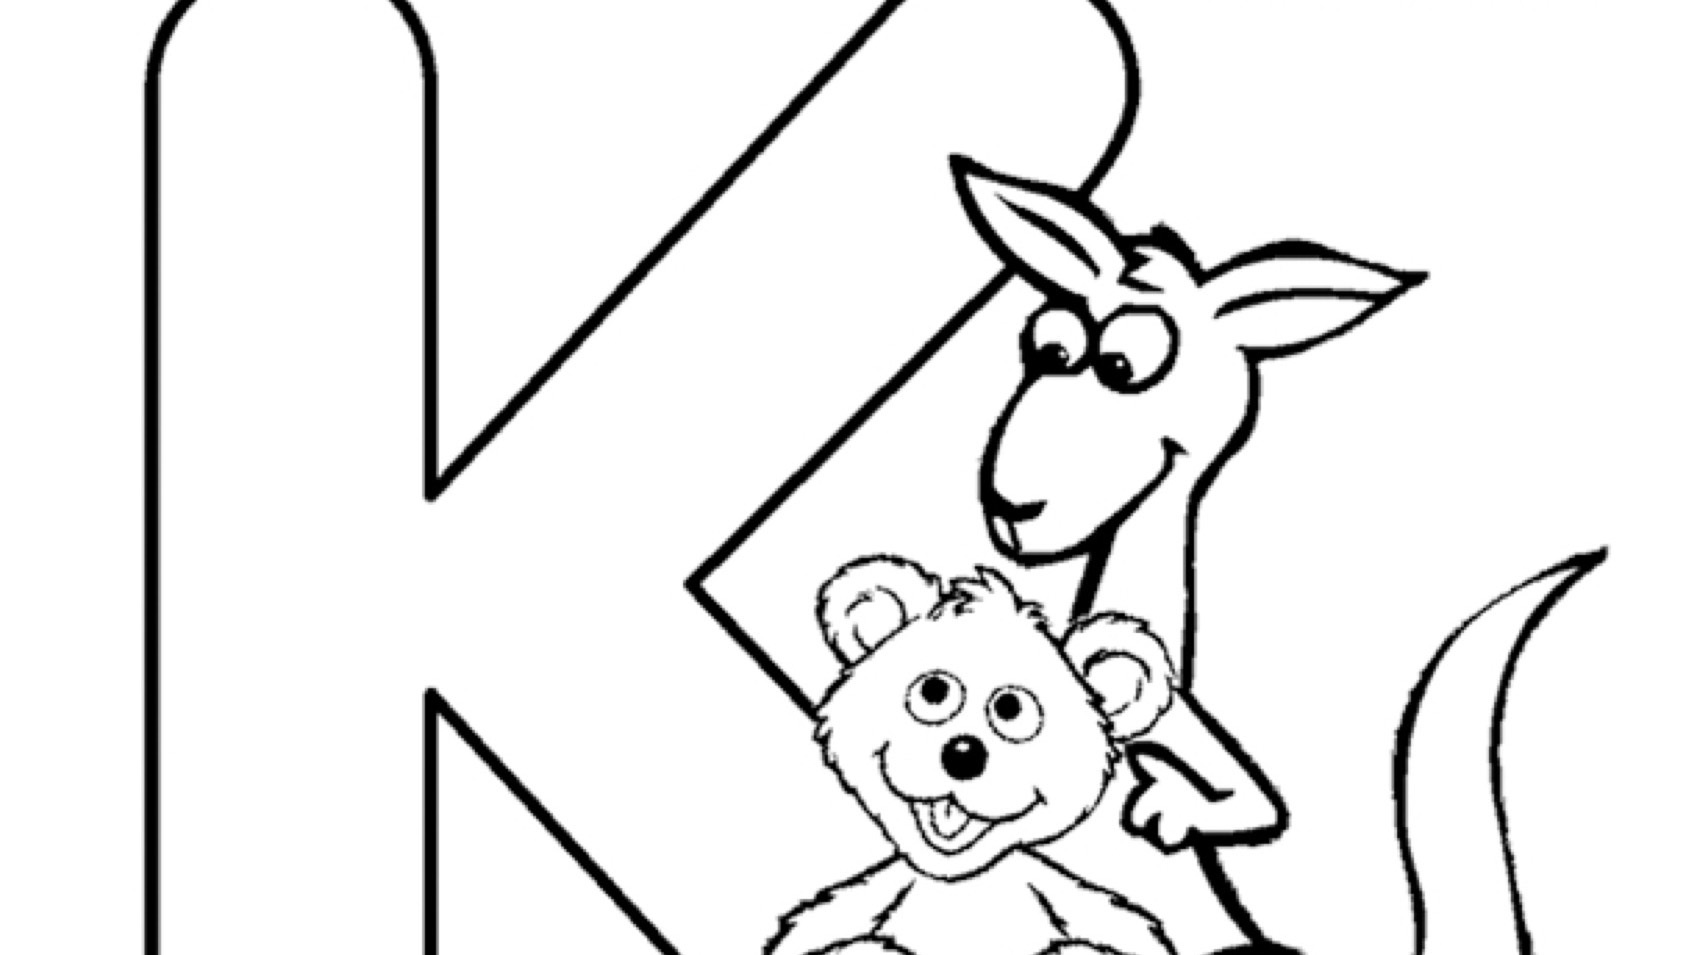 The letter k coloring page kids coloringâ kids for parents